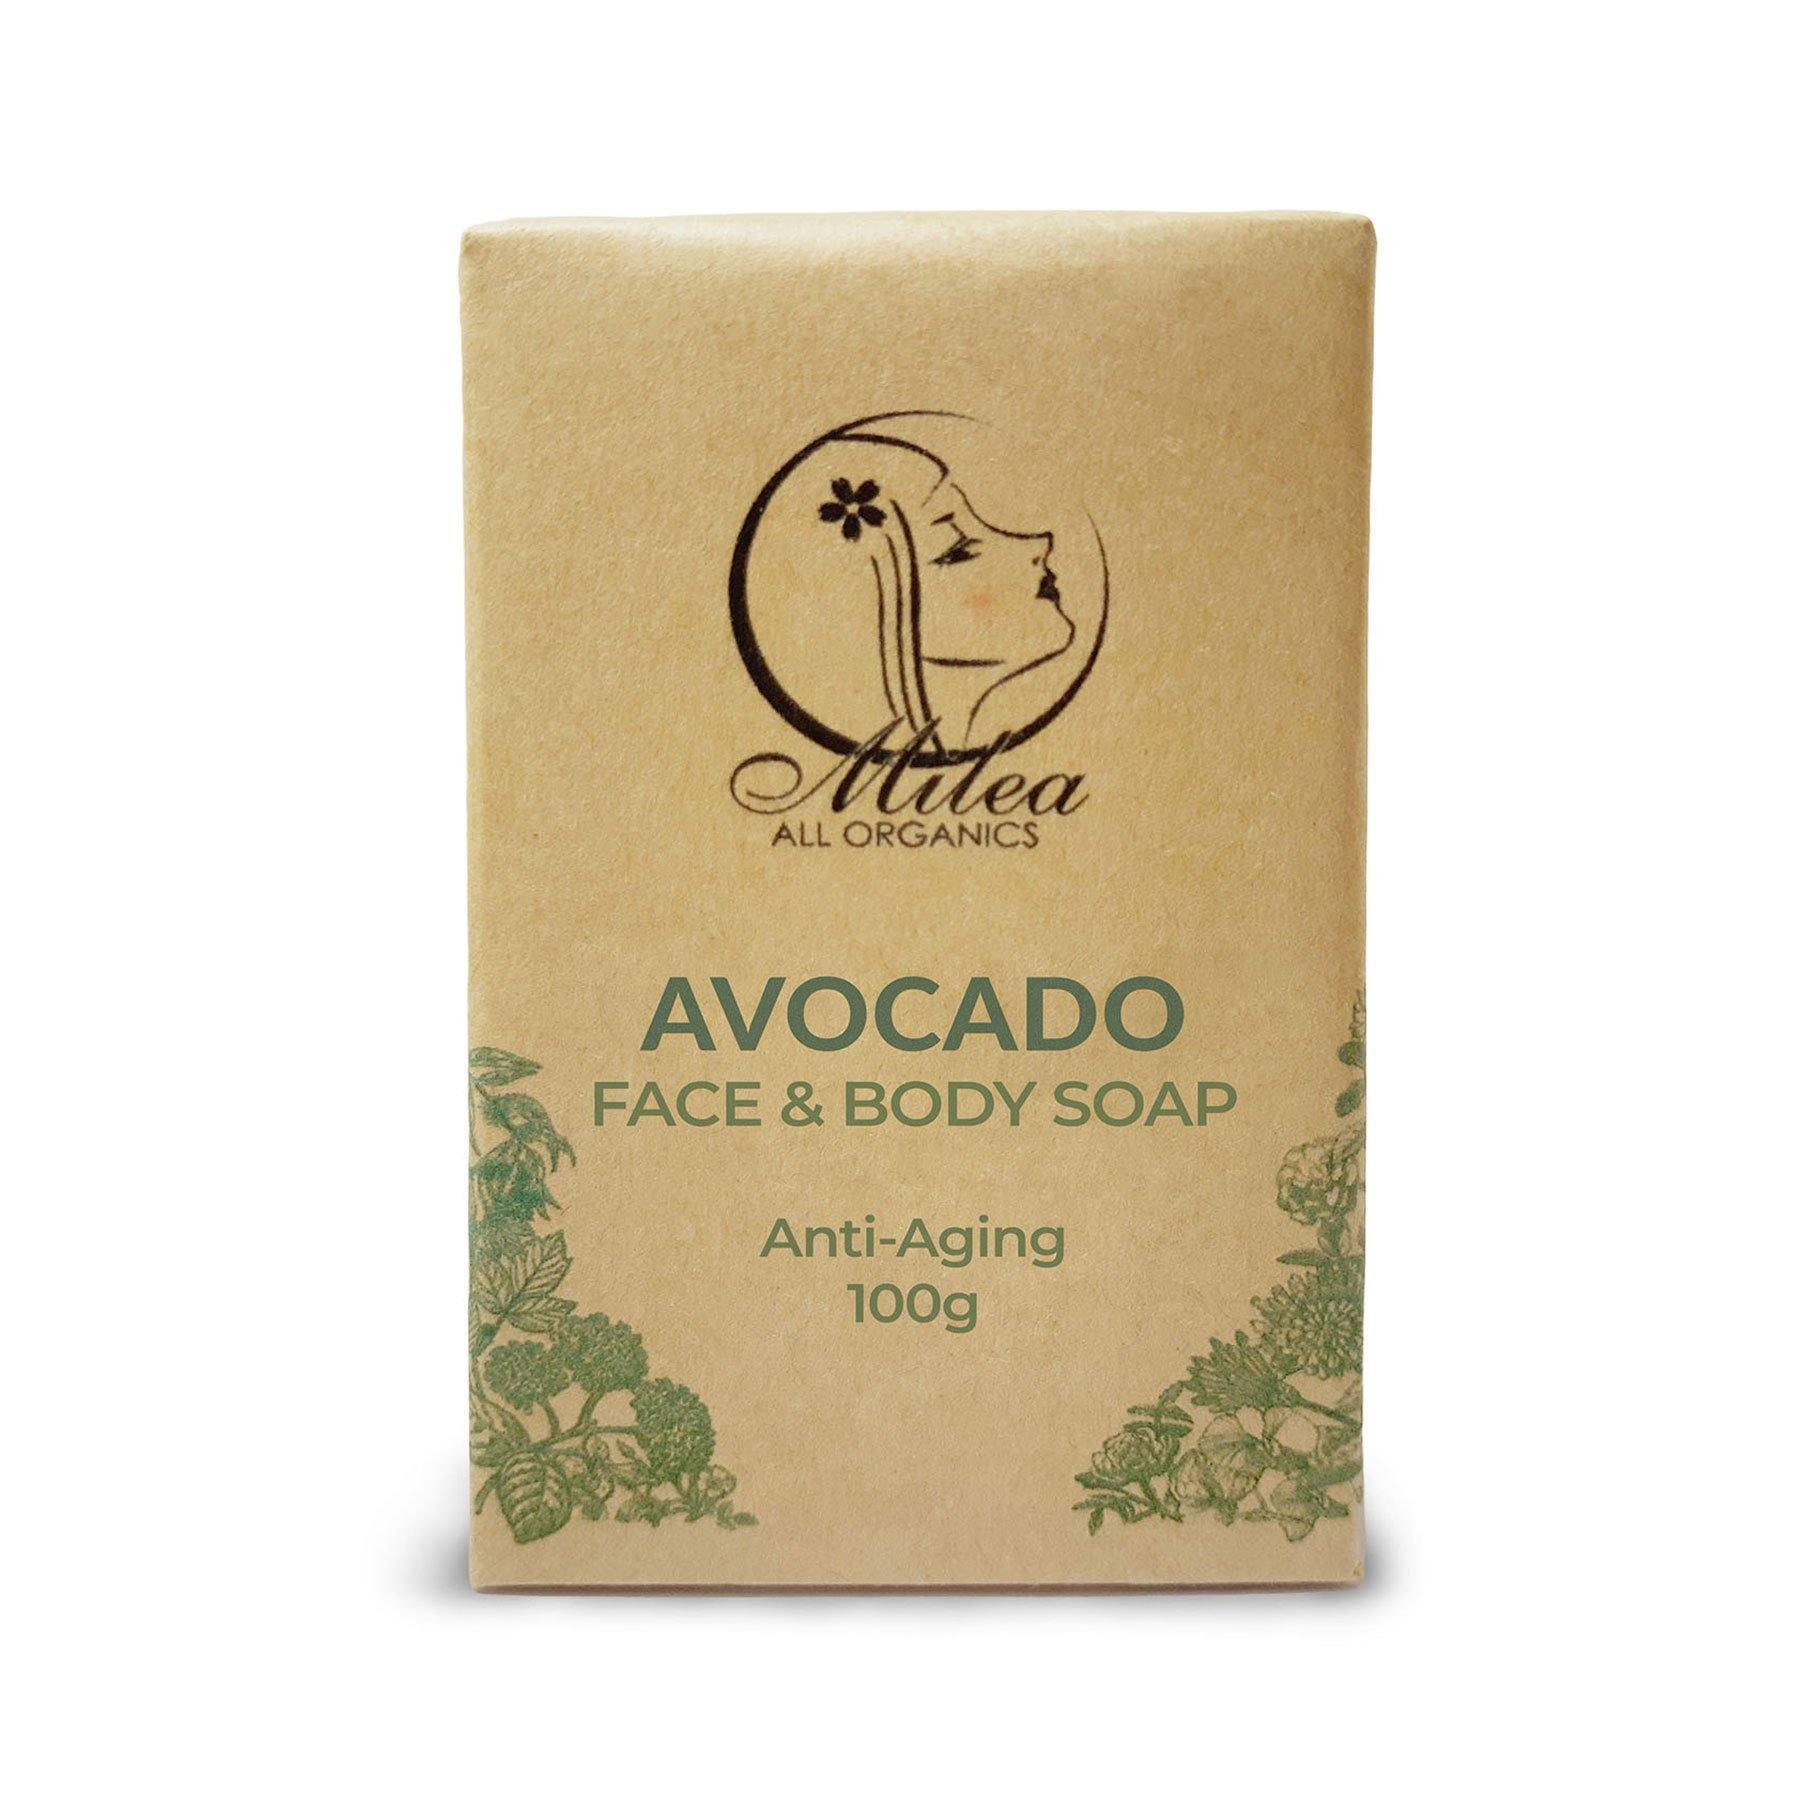 Avocado Anti-Aging Soap - Milea All Organics - Philippines